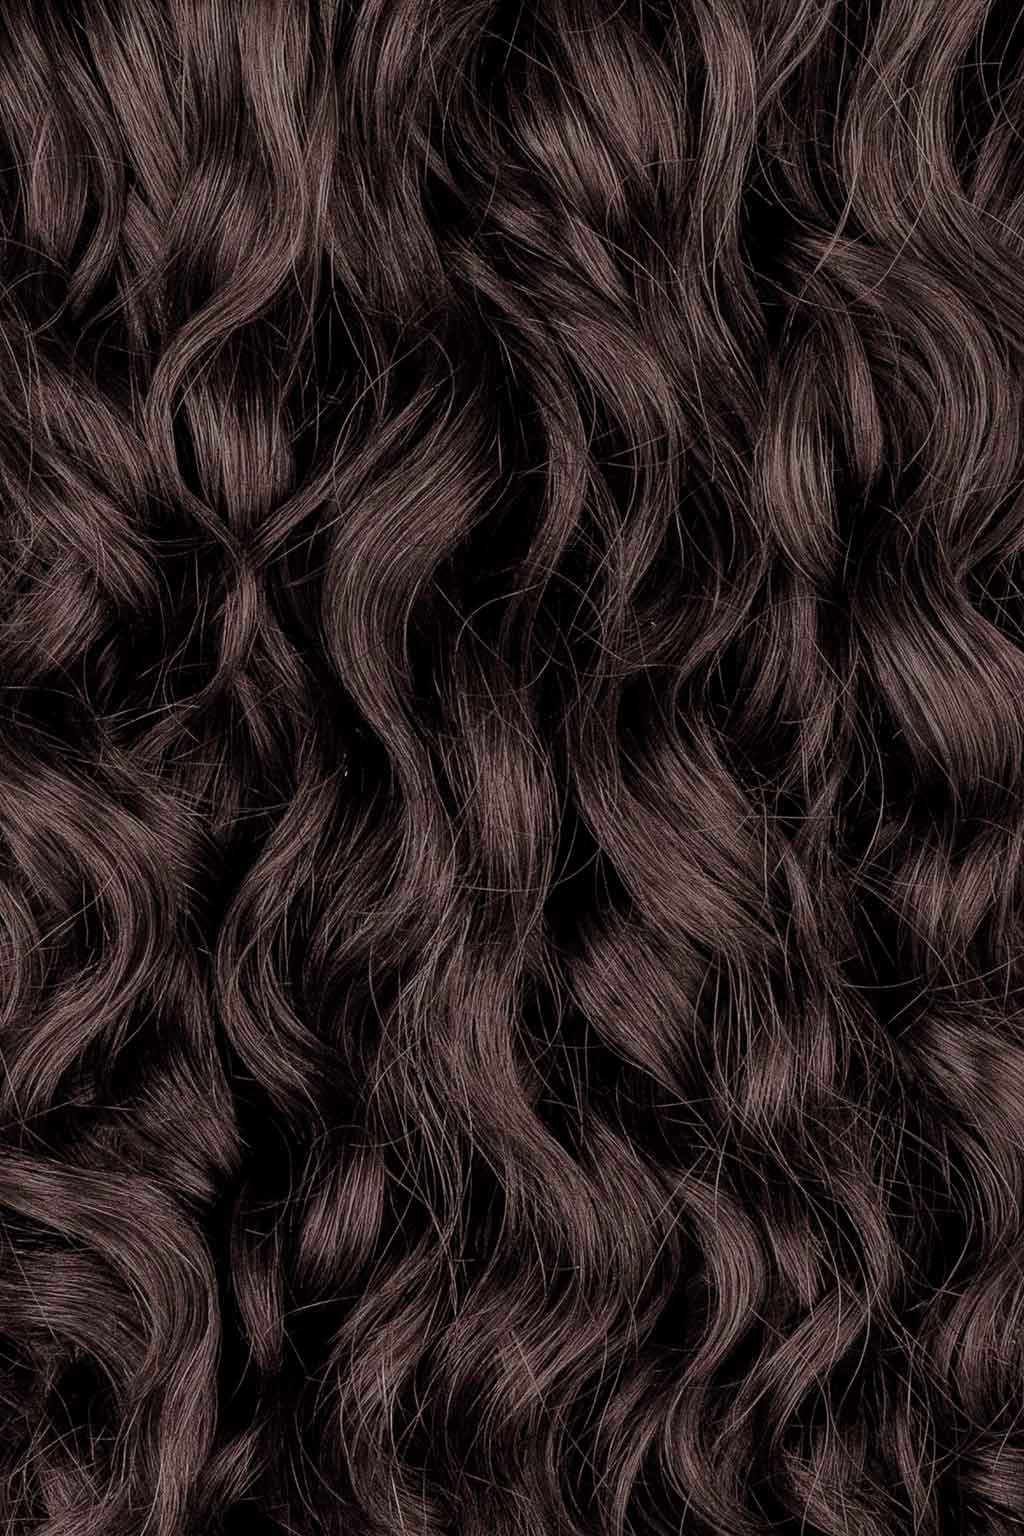 Neutral Dark Brown Curly Slip-On Hair Extensions 180G 22”